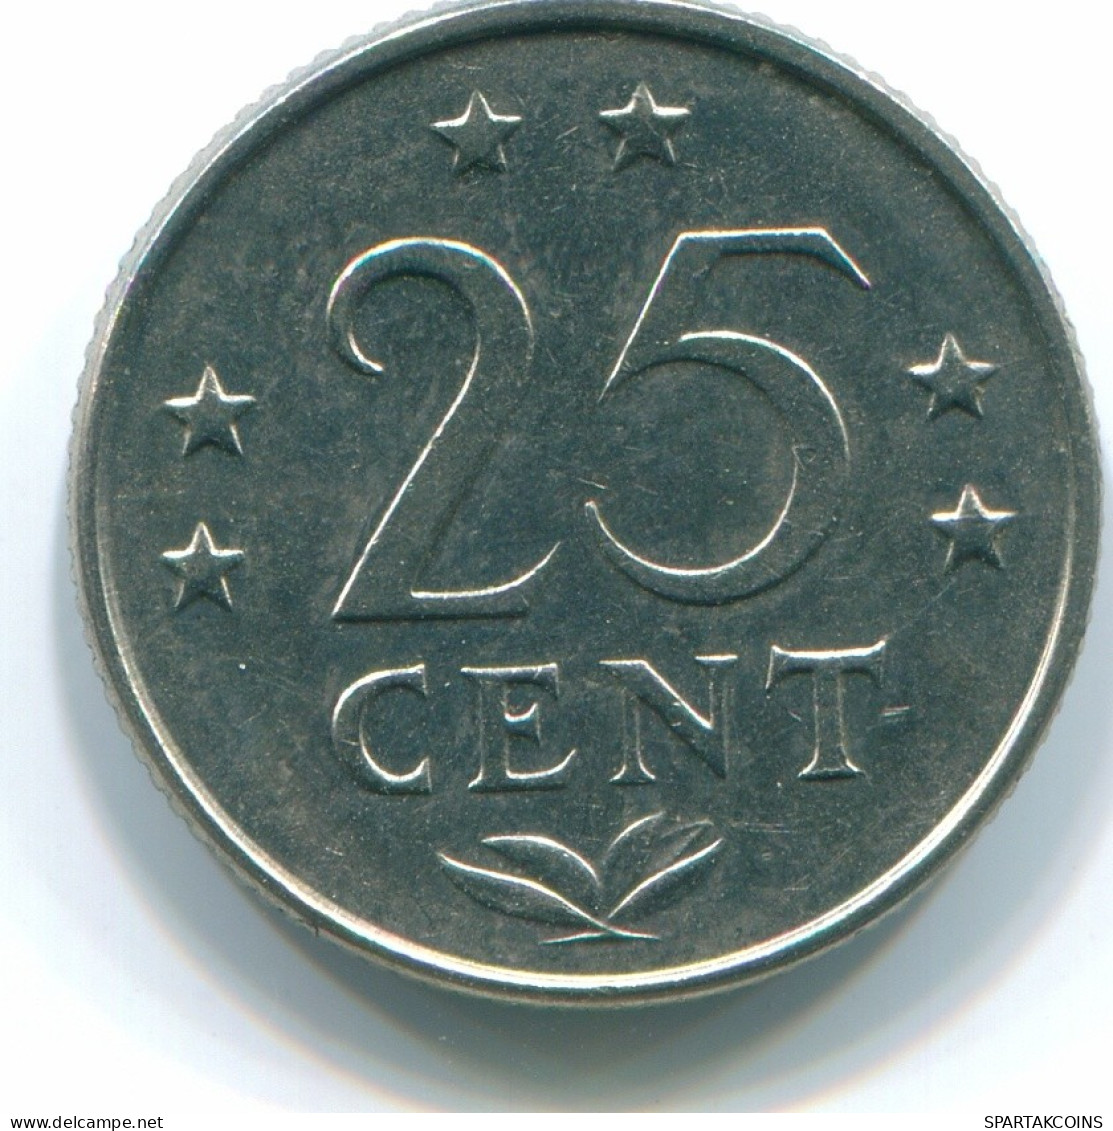 25 CENTS 1975 NIEDERLÄNDISCHE ANTILLEN Nickel Koloniale Münze #S11623.D.A - Netherlands Antilles